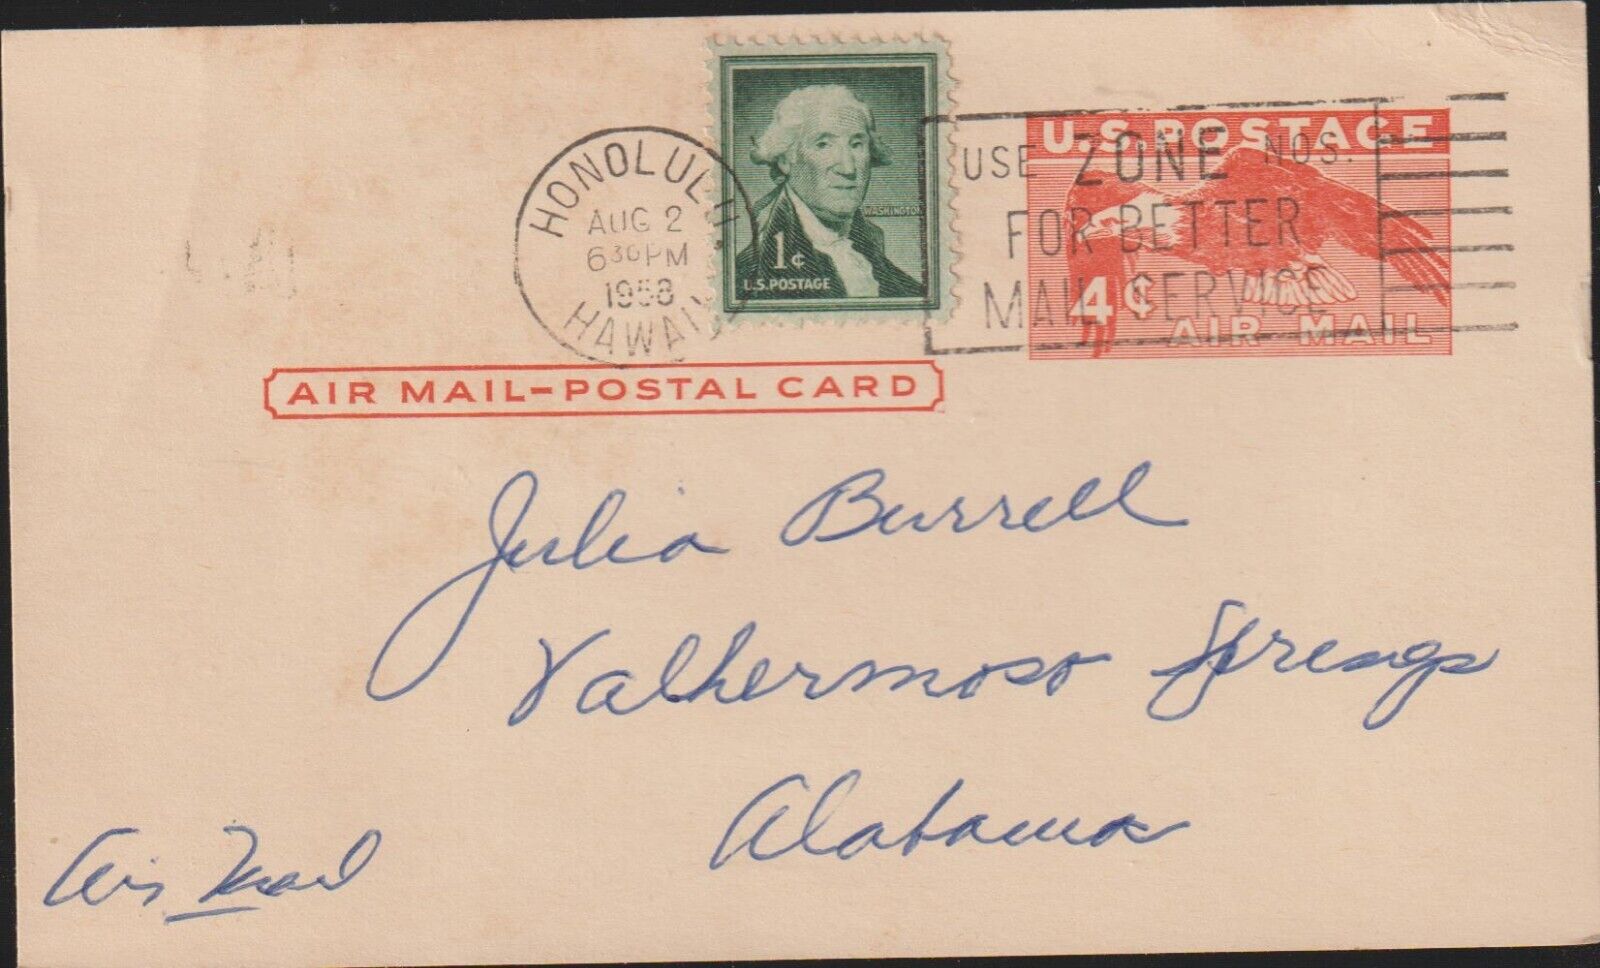 1958 Postal Card Honolulu Hawaii to Alabama Air Mail Postcard